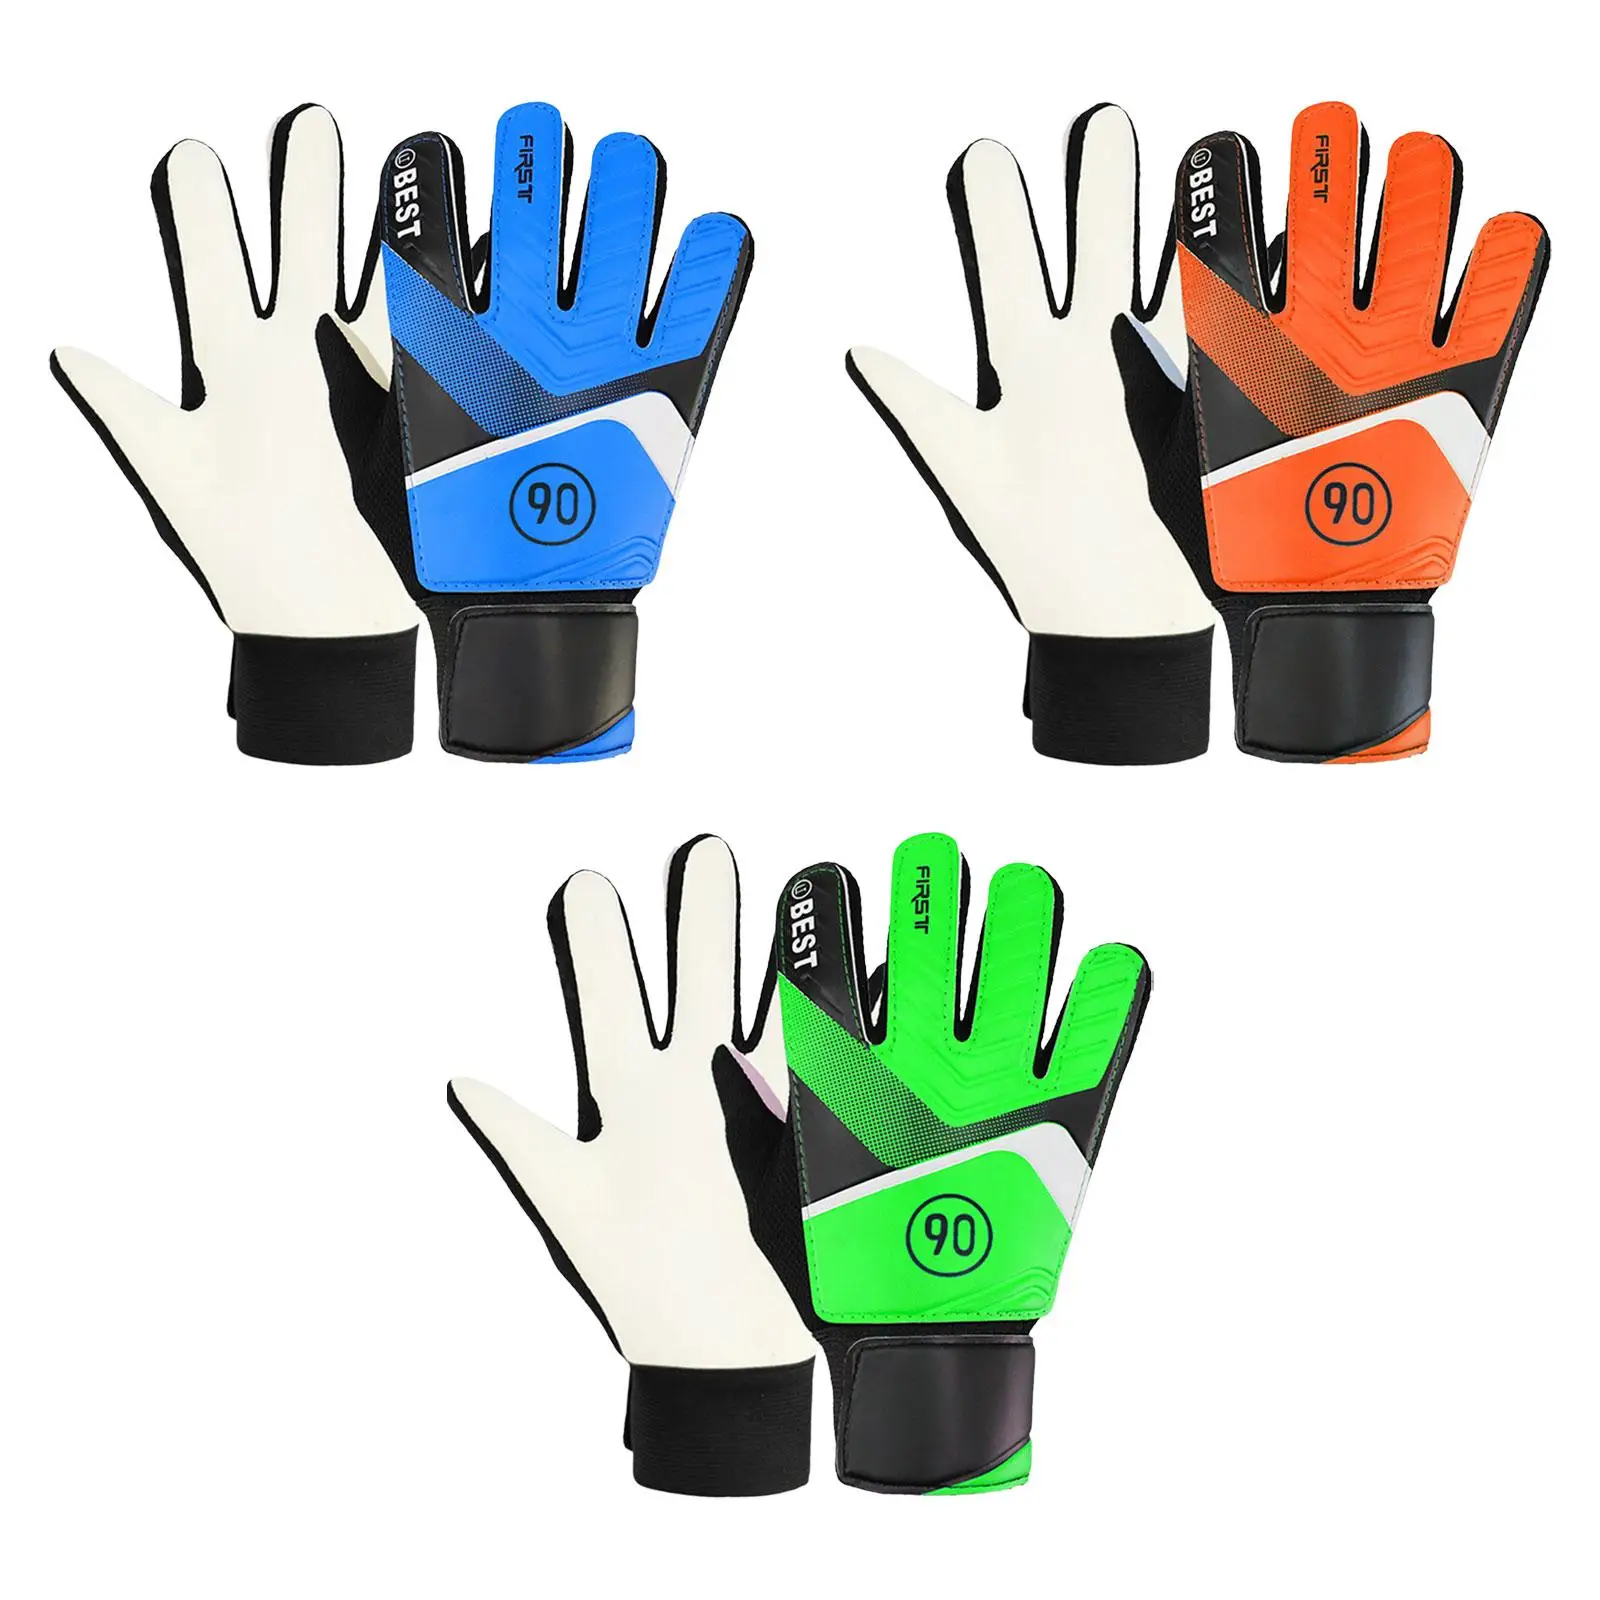 Soccer Goalkeeper Gloves Breathable Nonslip Match Anticollision Comfortable Strong Grip Goalie Gloves Latex Palm for Boys Girls